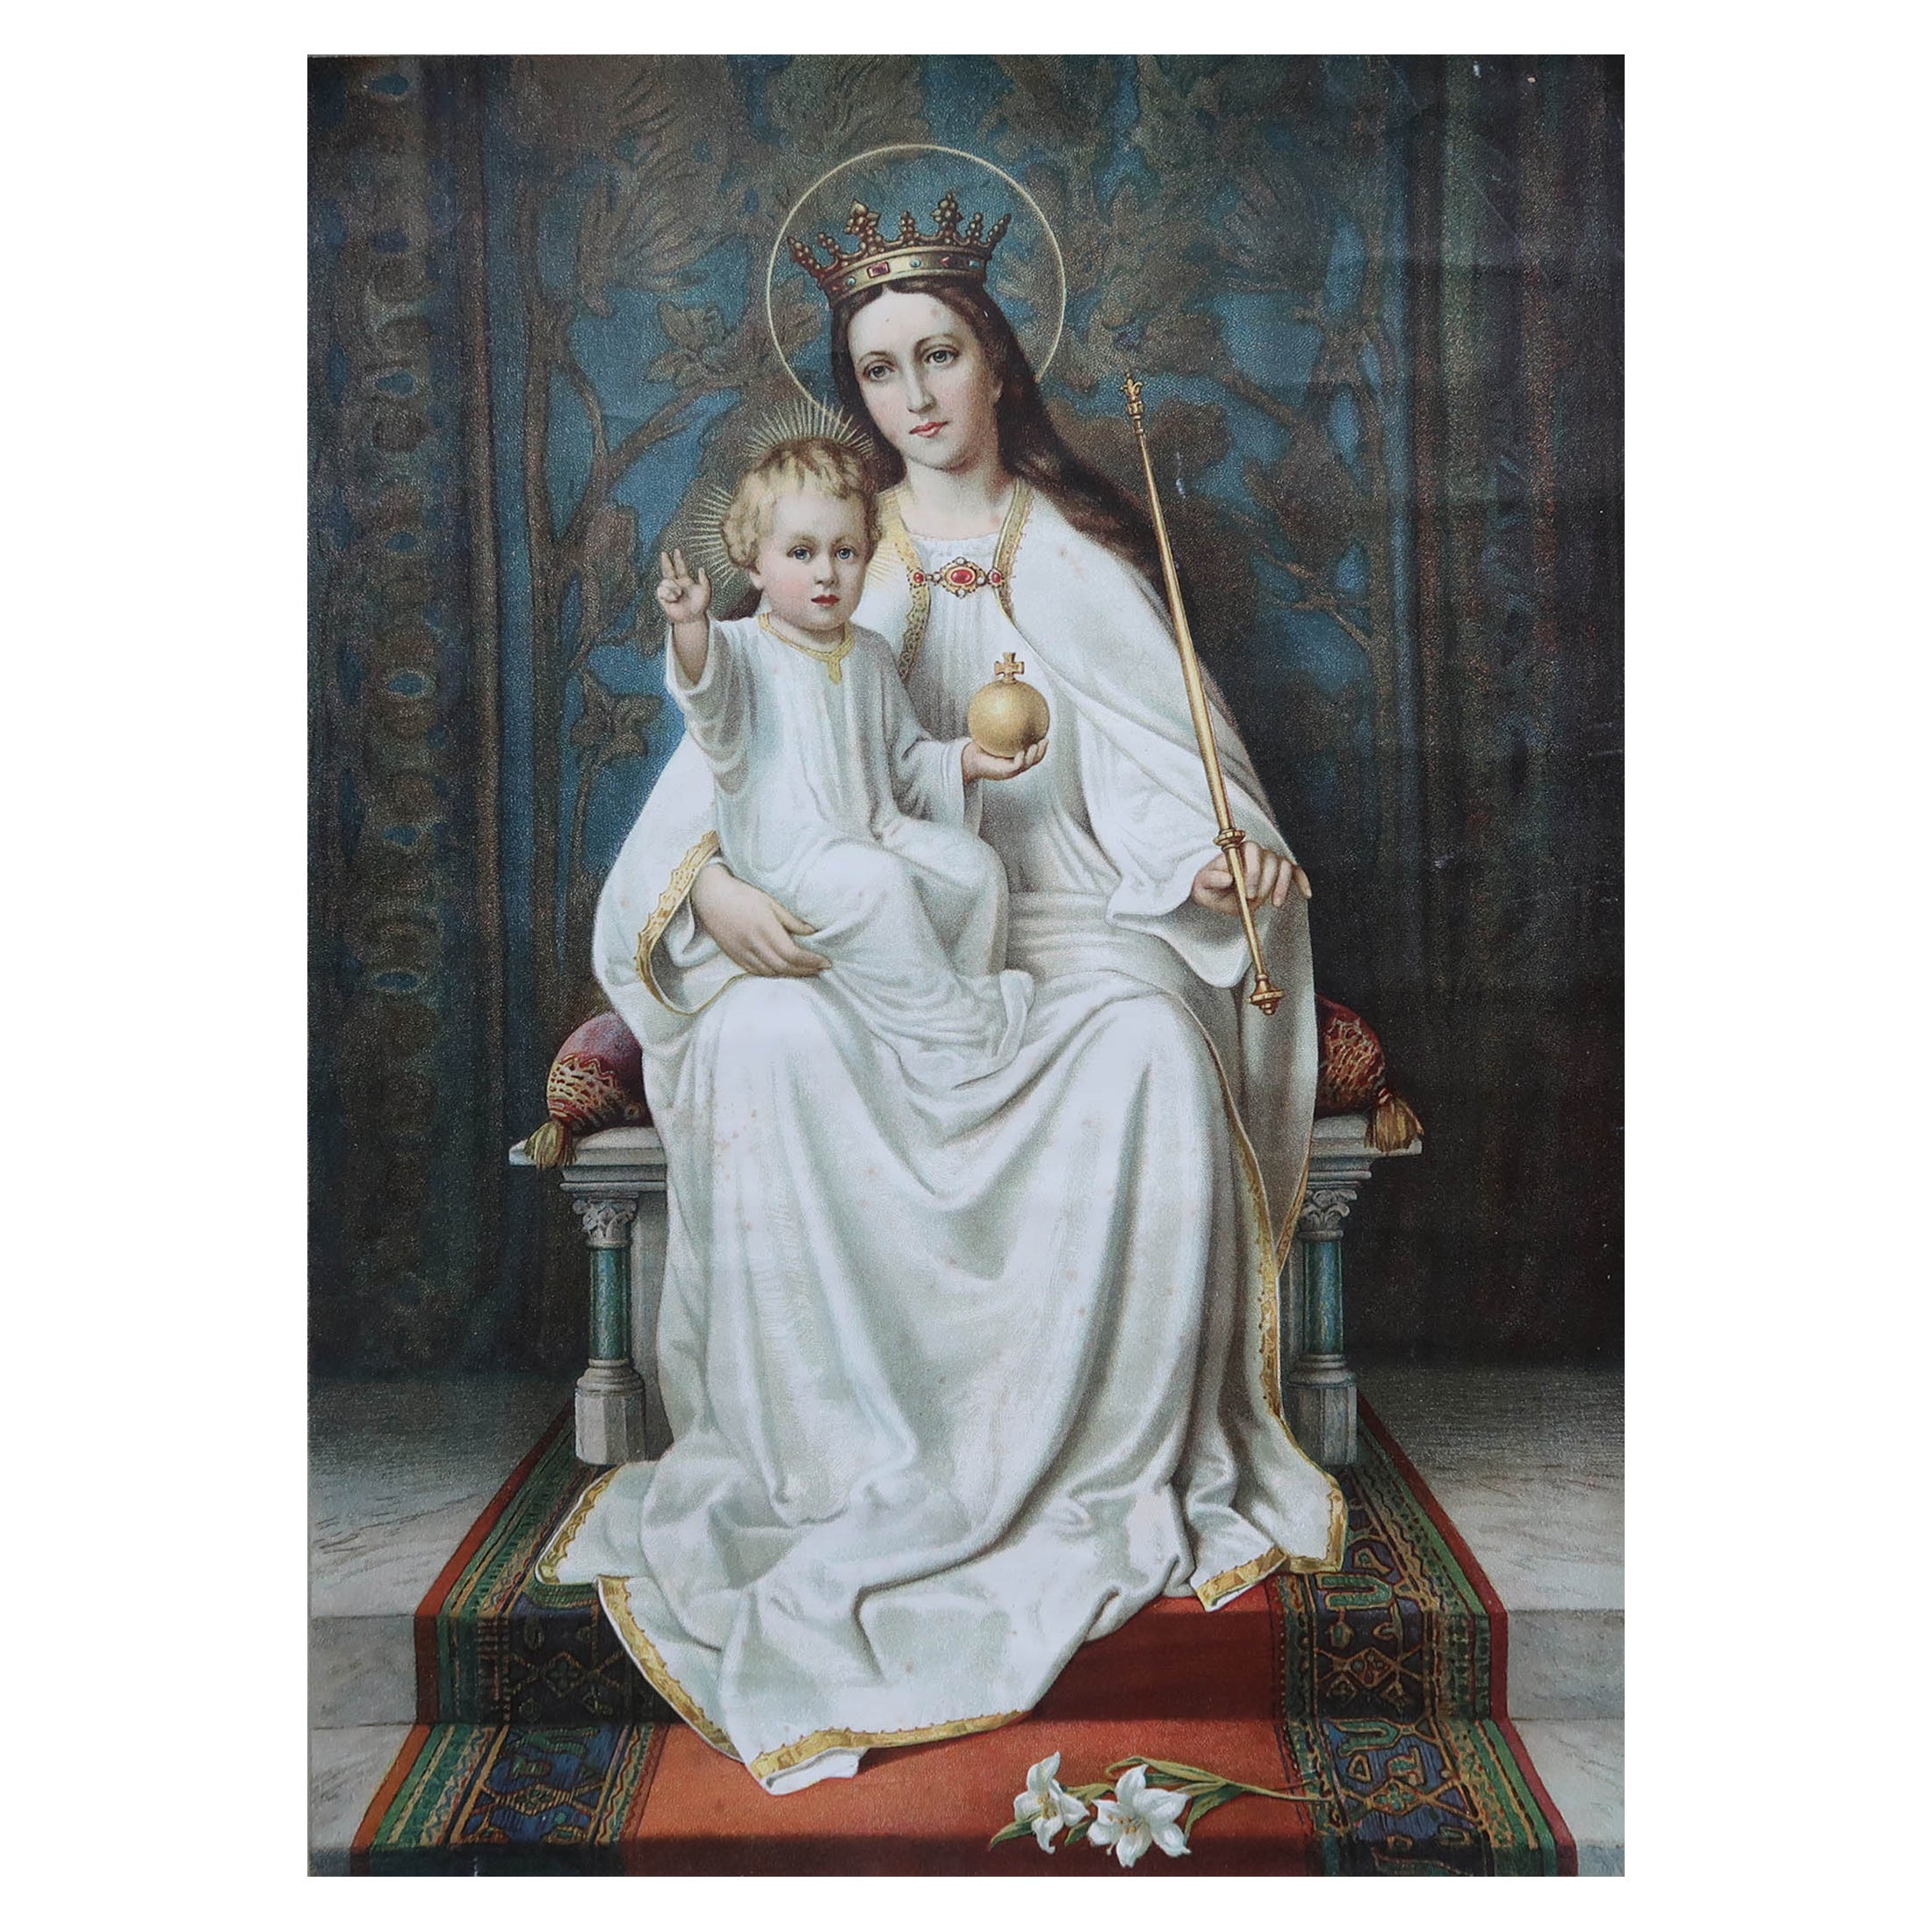 Large Original Antique Print of the Madonna and Child, circa 1900